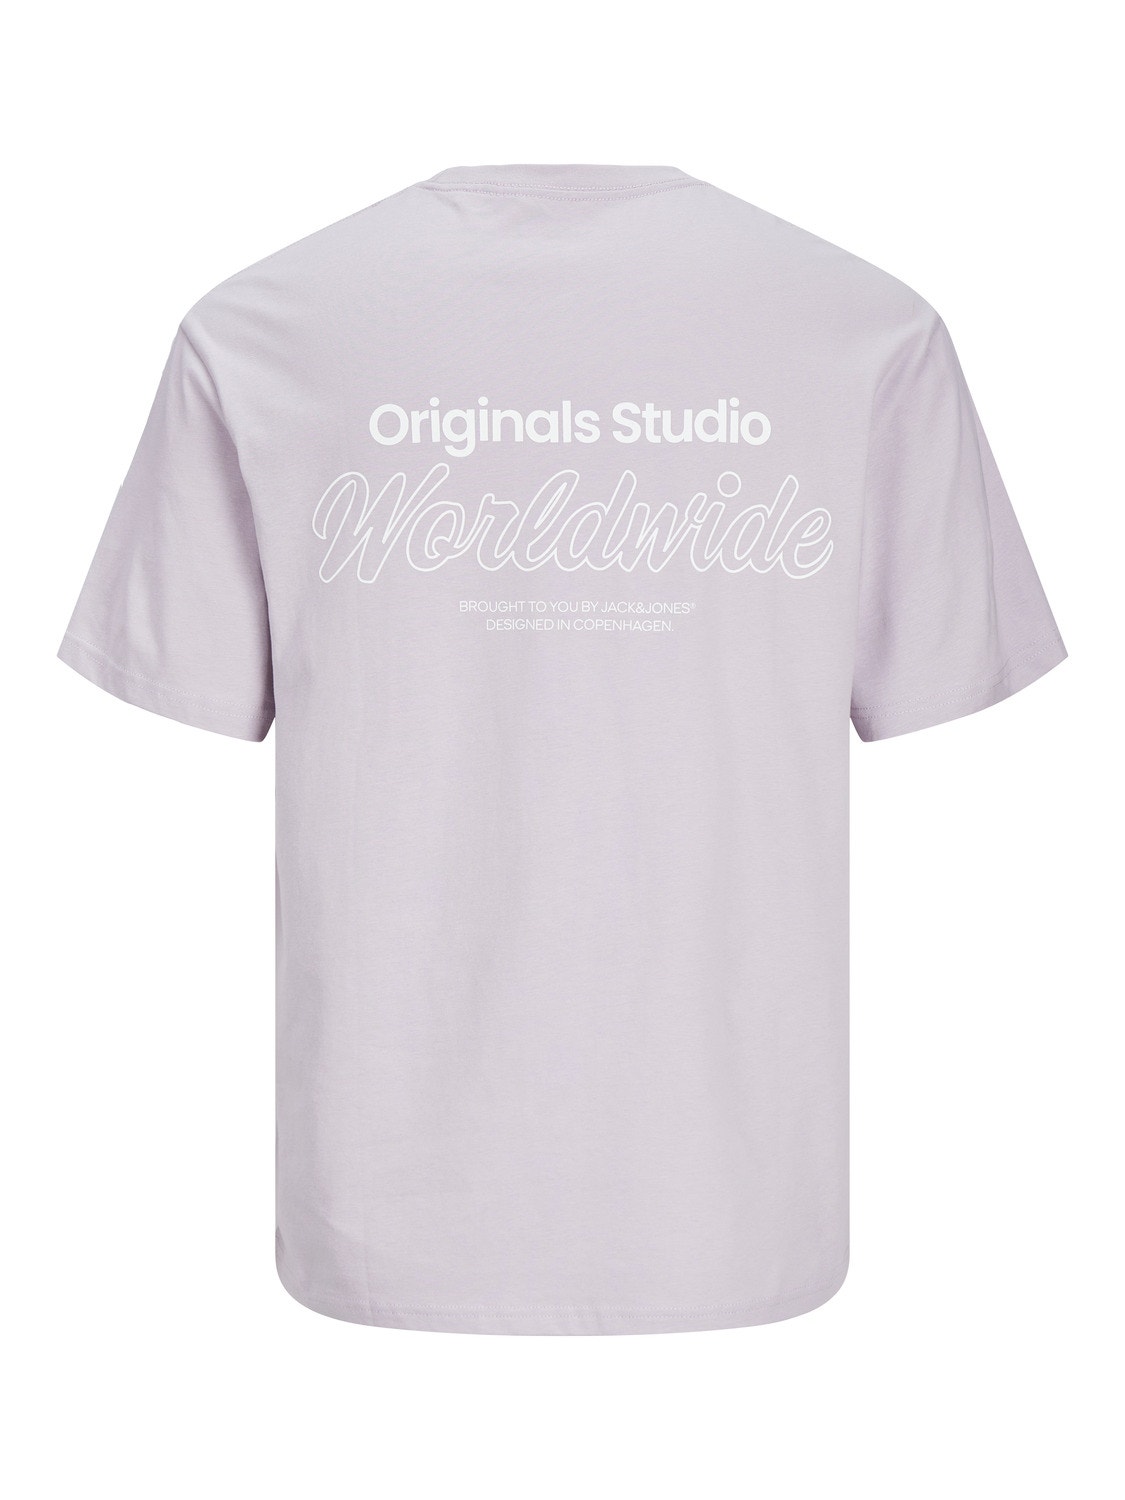 Jack & Jones T-shirt Estampar Decote Redondo -Lavender Frost - 12240122